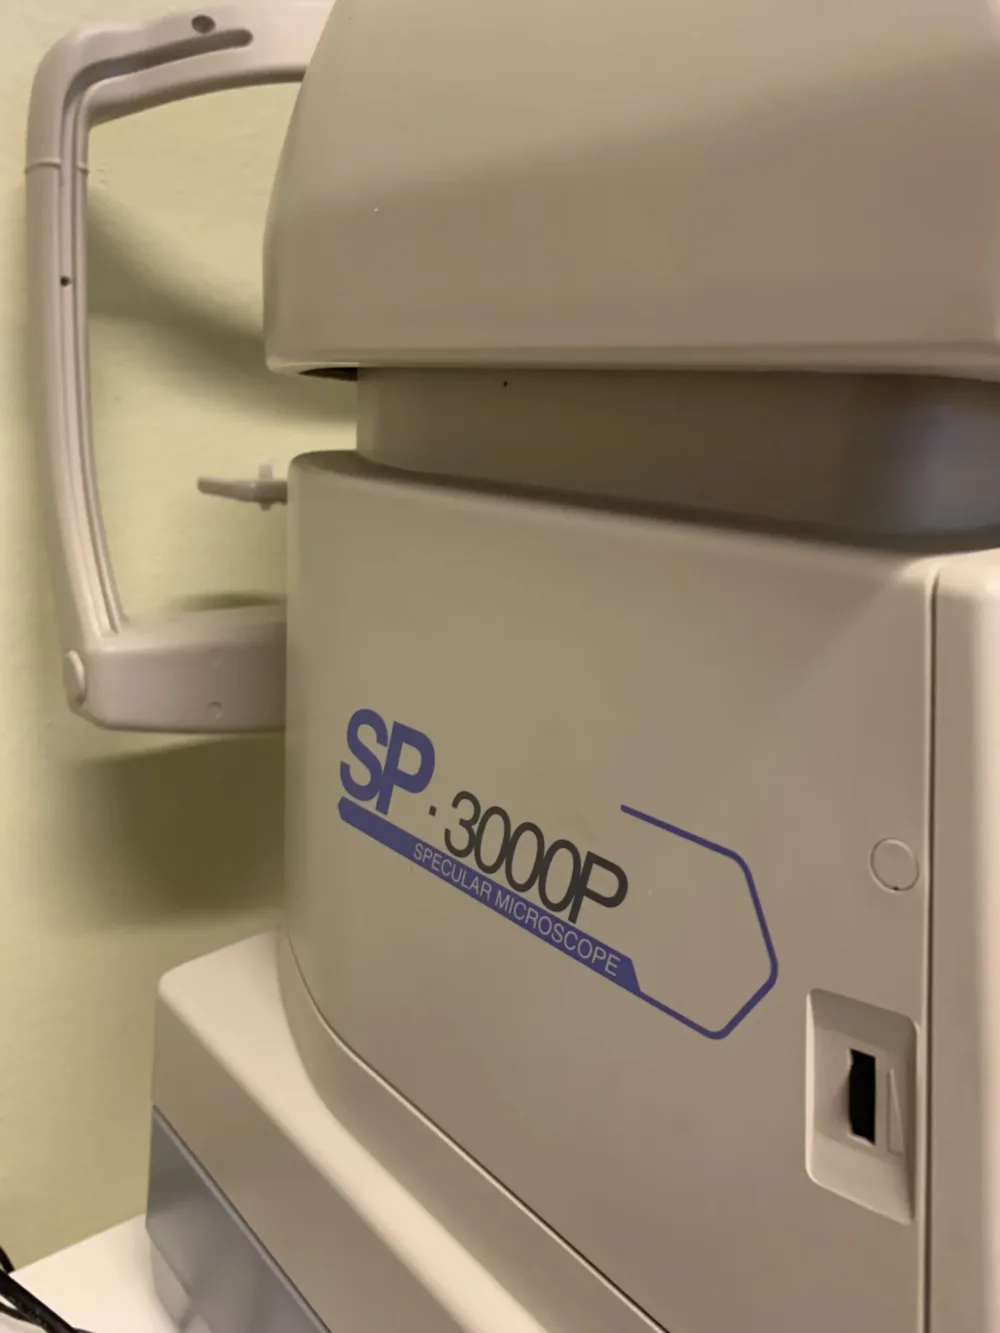 TOPCON SP-3000P Specular Microscope